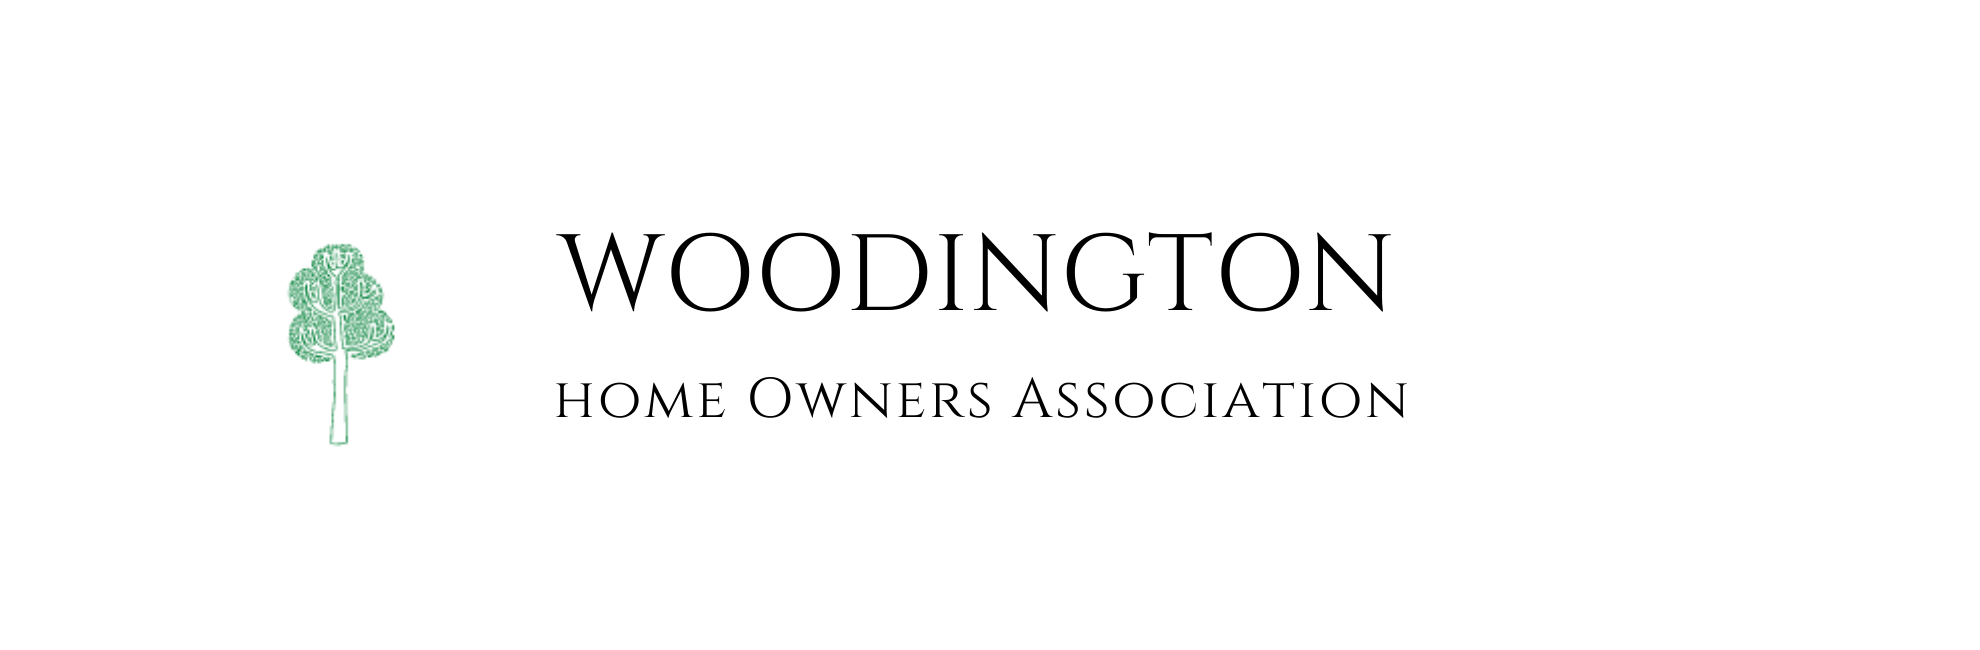 Woodington Home Owners Association